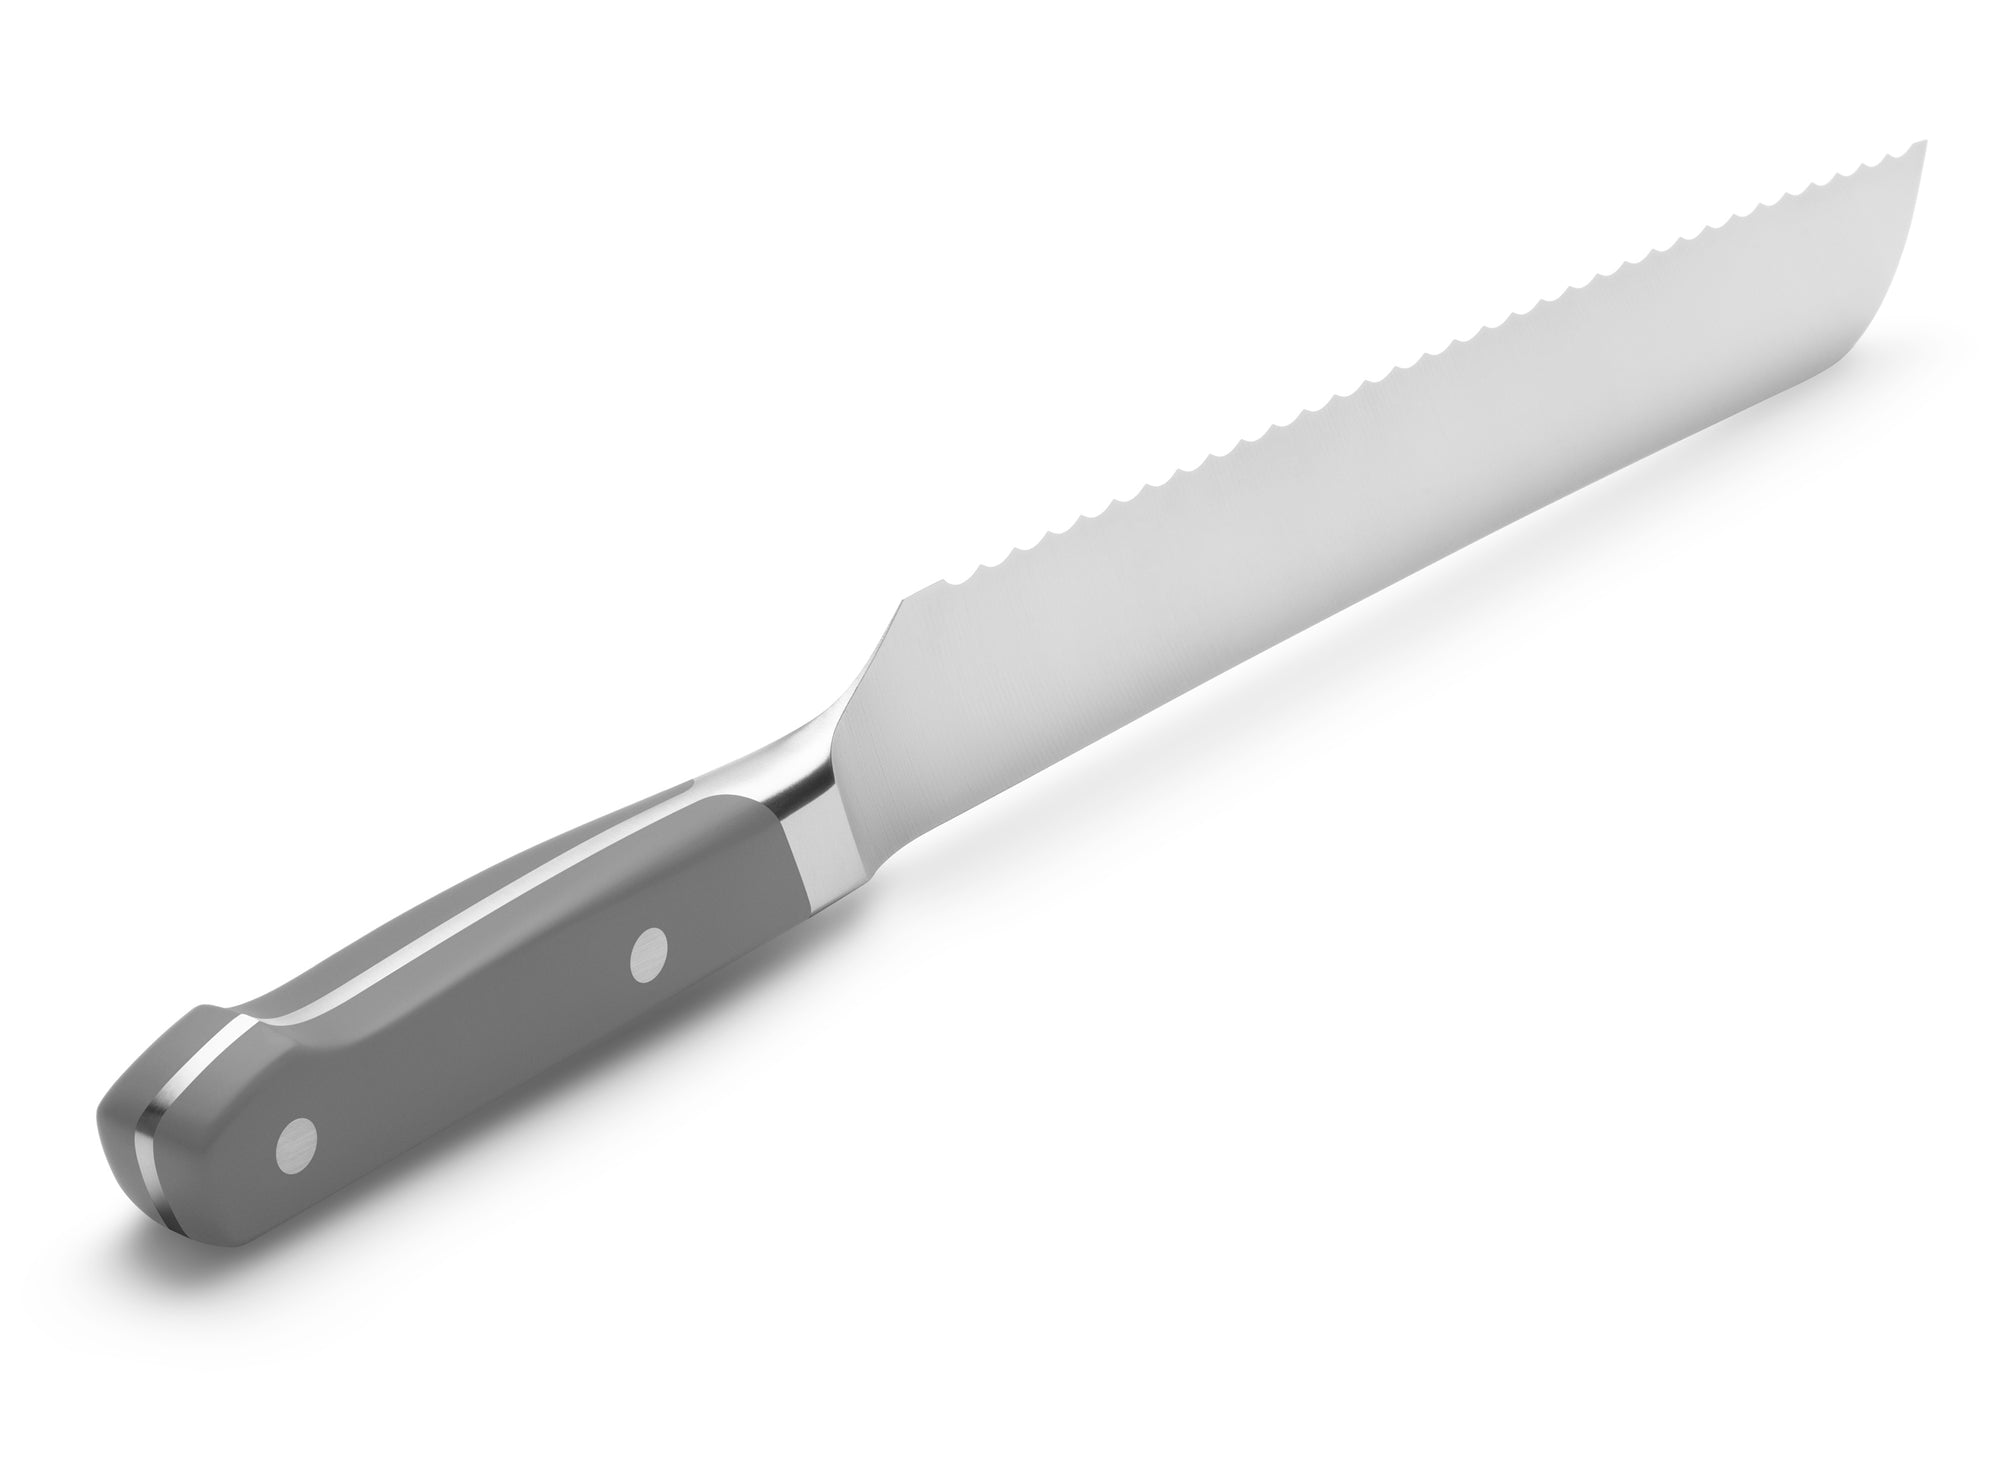 10 Serrated Bread Knife